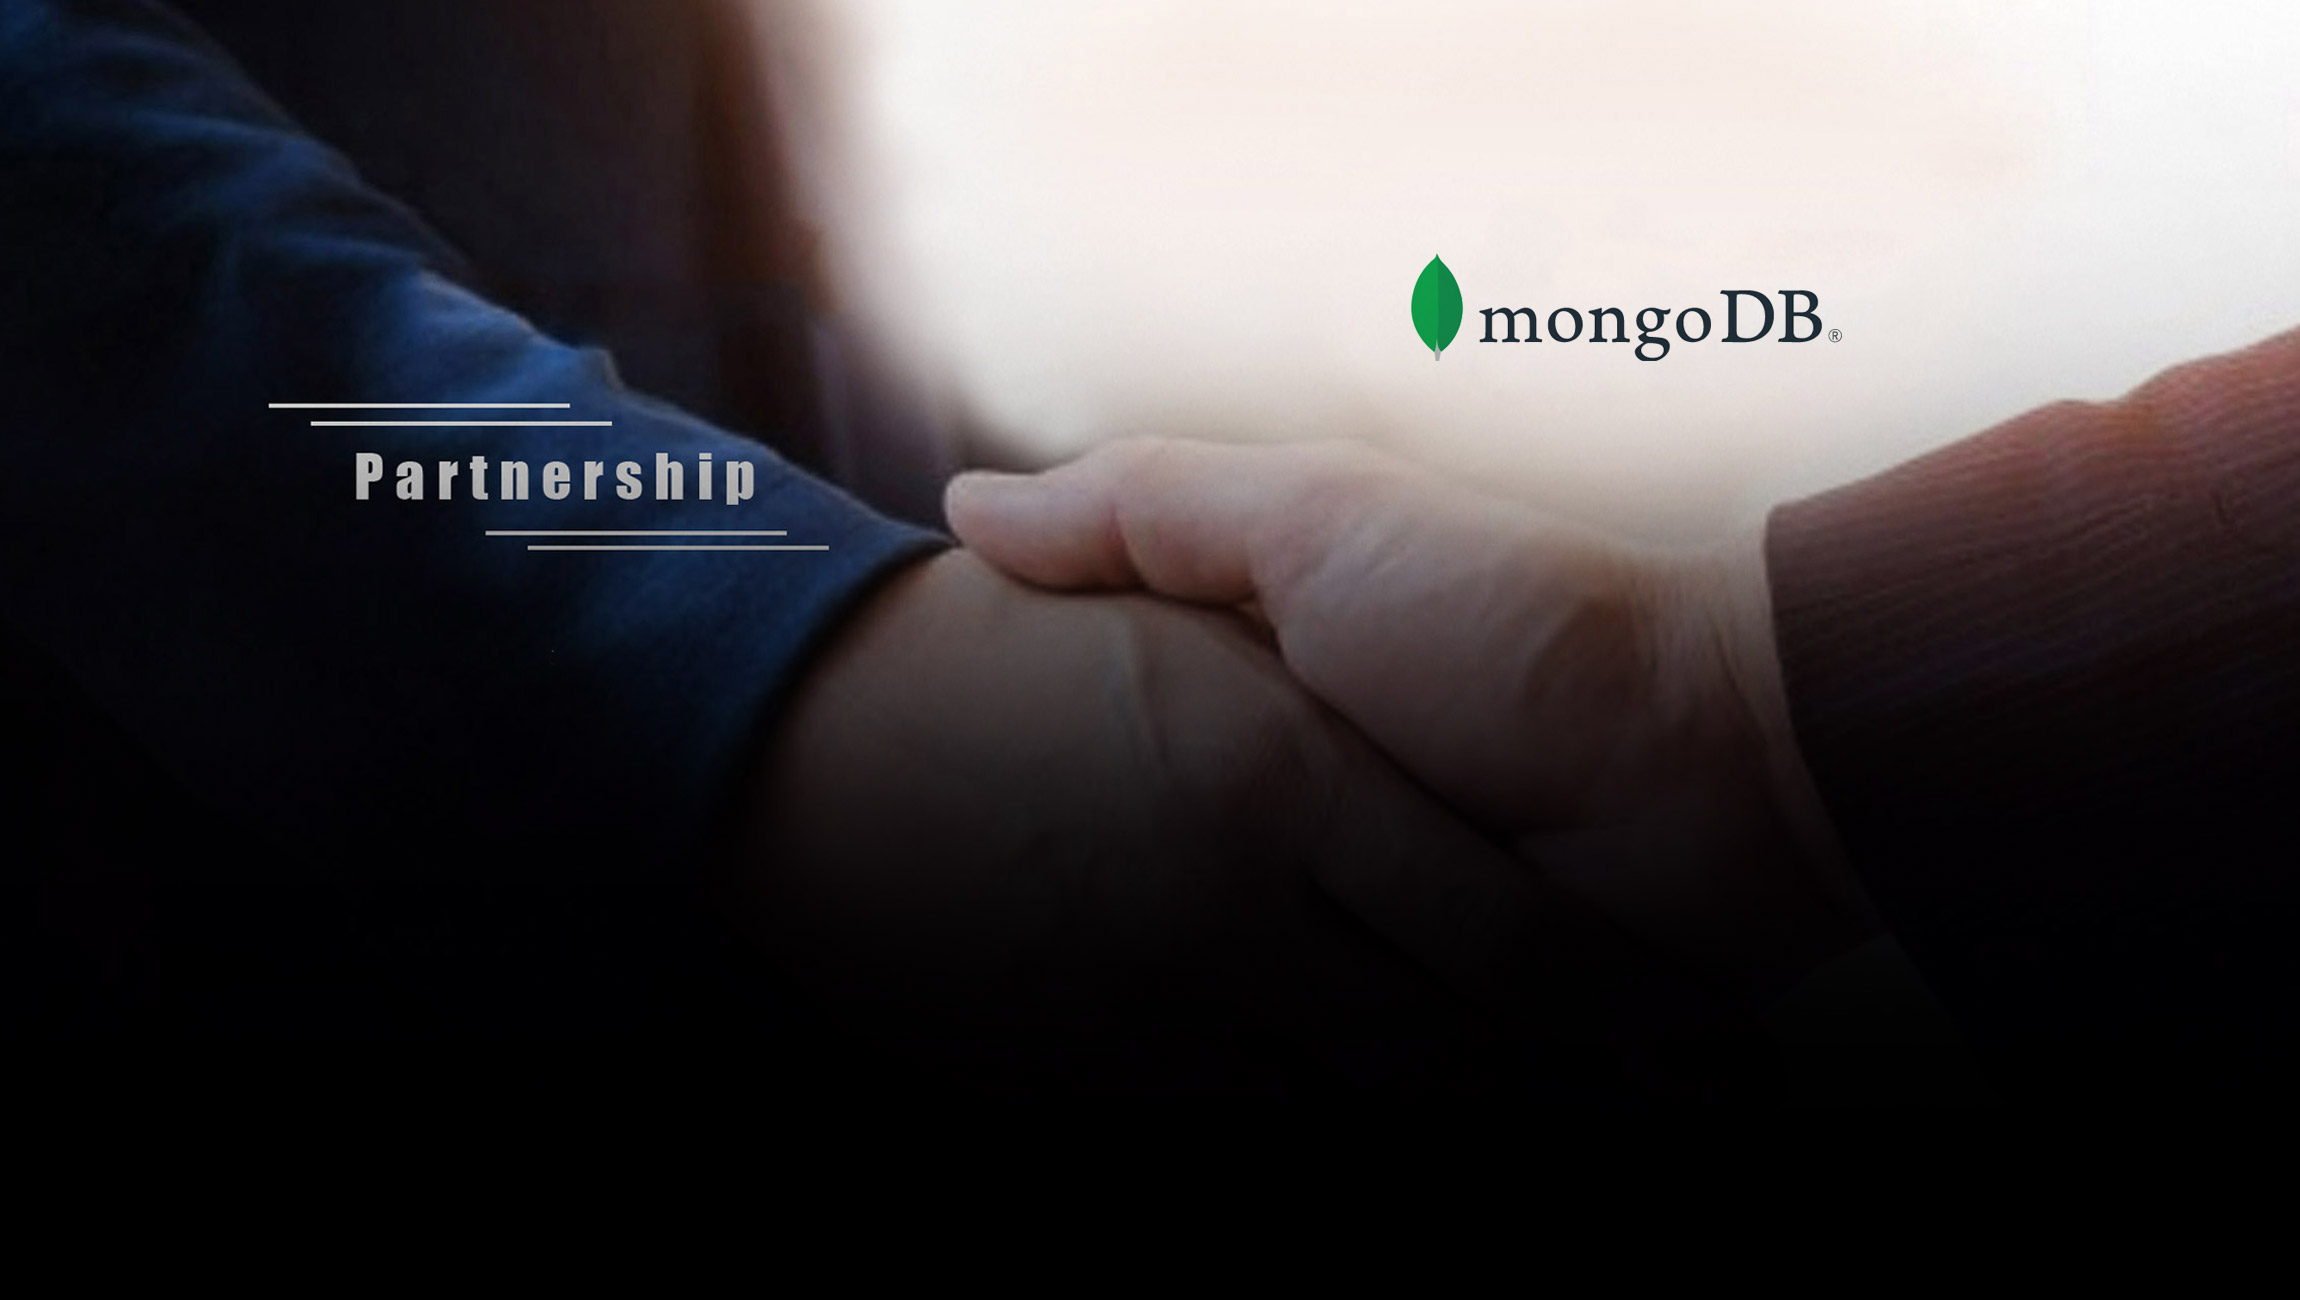 DigitalOcean Launches Managed MongoDB